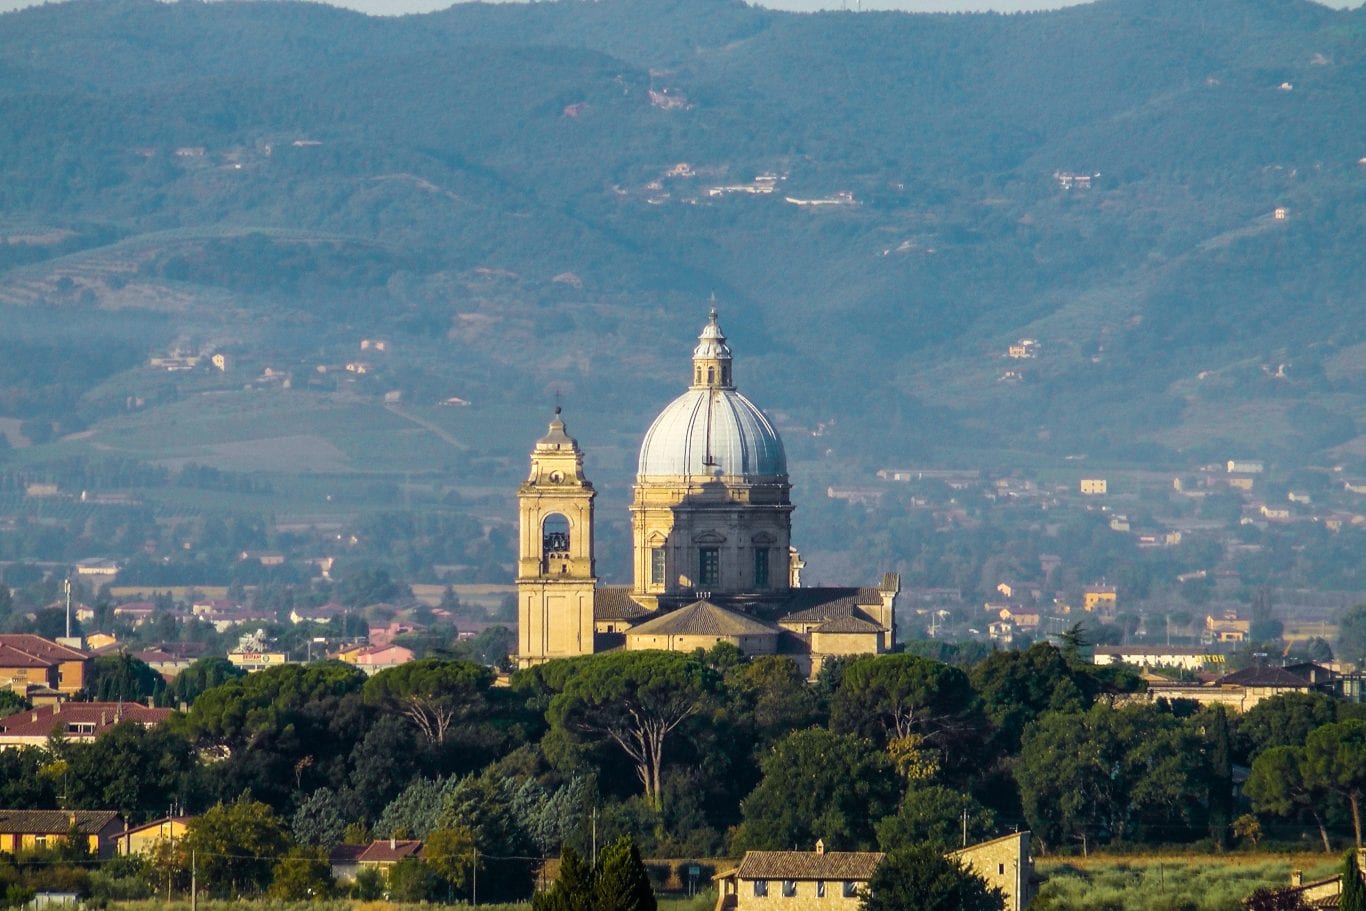 Basilica di Santa Maria degli Angeli - Things to Do and See in Umbria